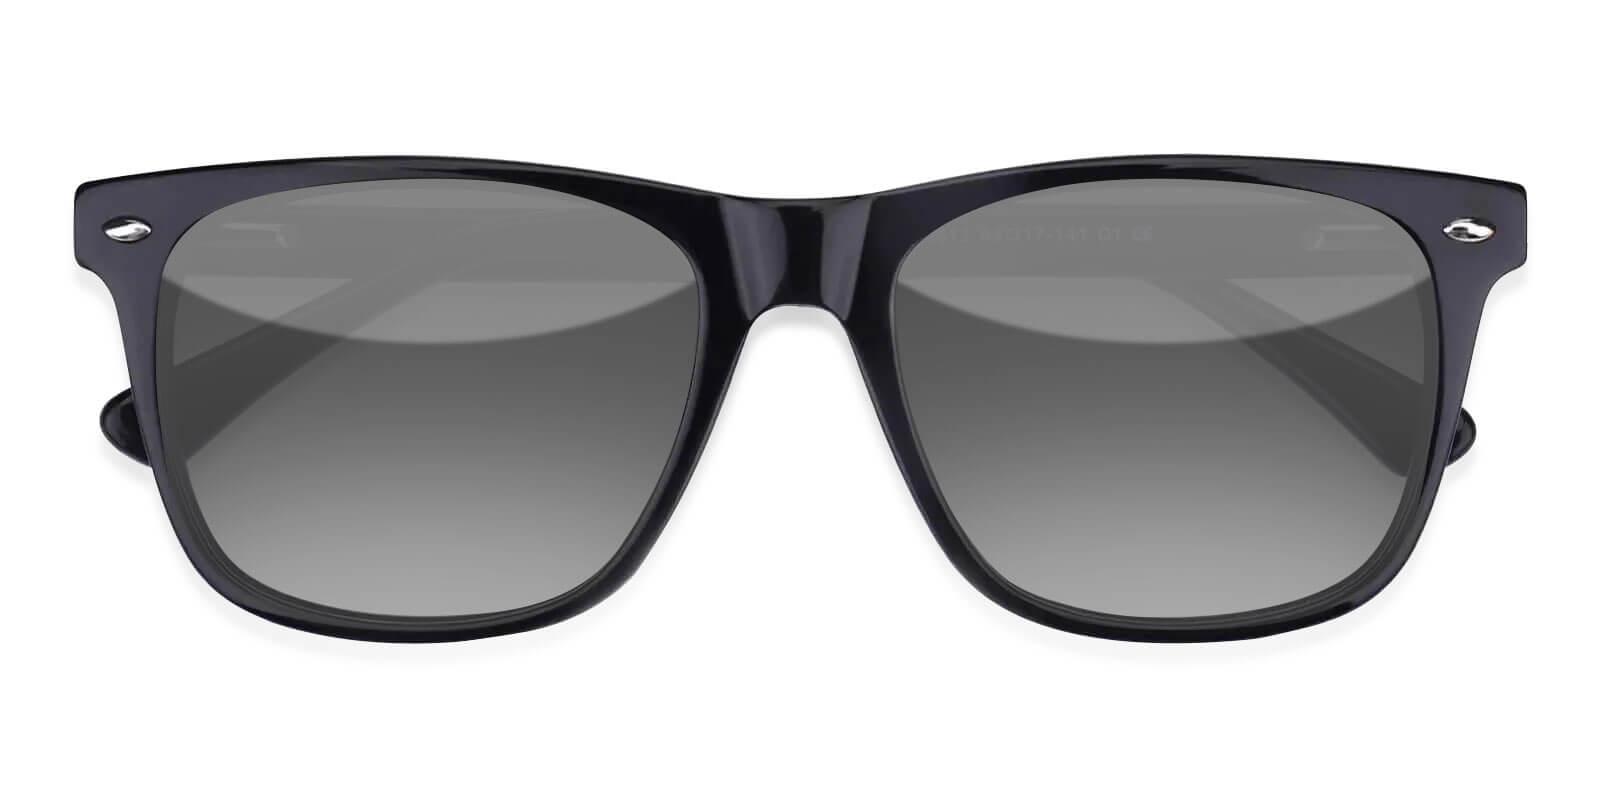 Hepburn Black Acetate SpringHinges , Sunglasses , UniversalBridgeFit Frames from ABBE Glasses